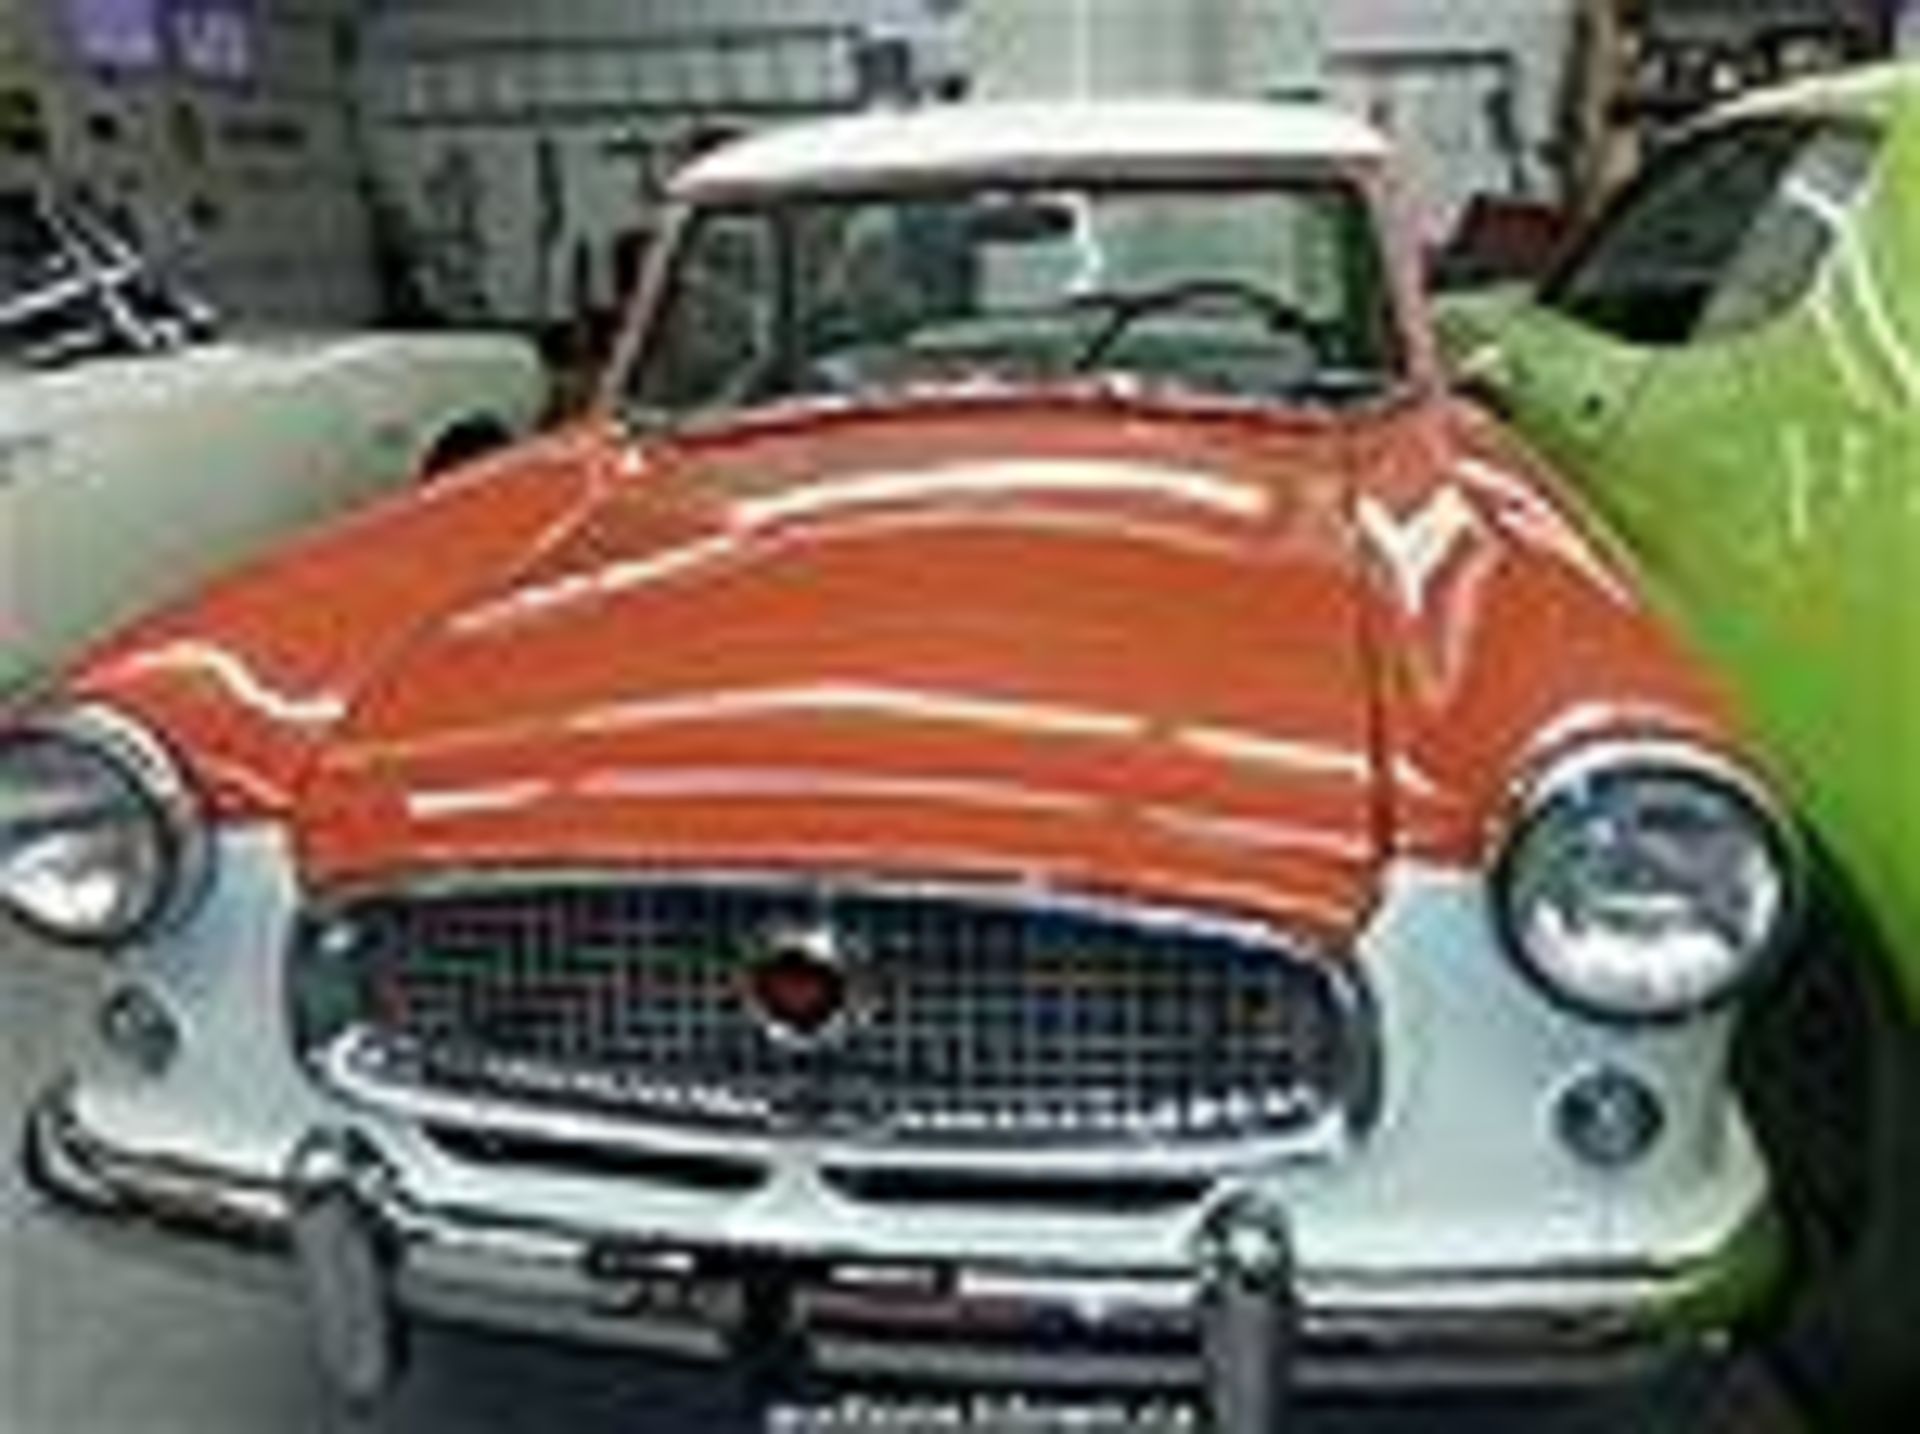 1960 AMC Metropolitan Coupe, # E 82993, 2 door sedan, Series V1, Mardi Gras red and white, 12,199 - Image 3 of 5